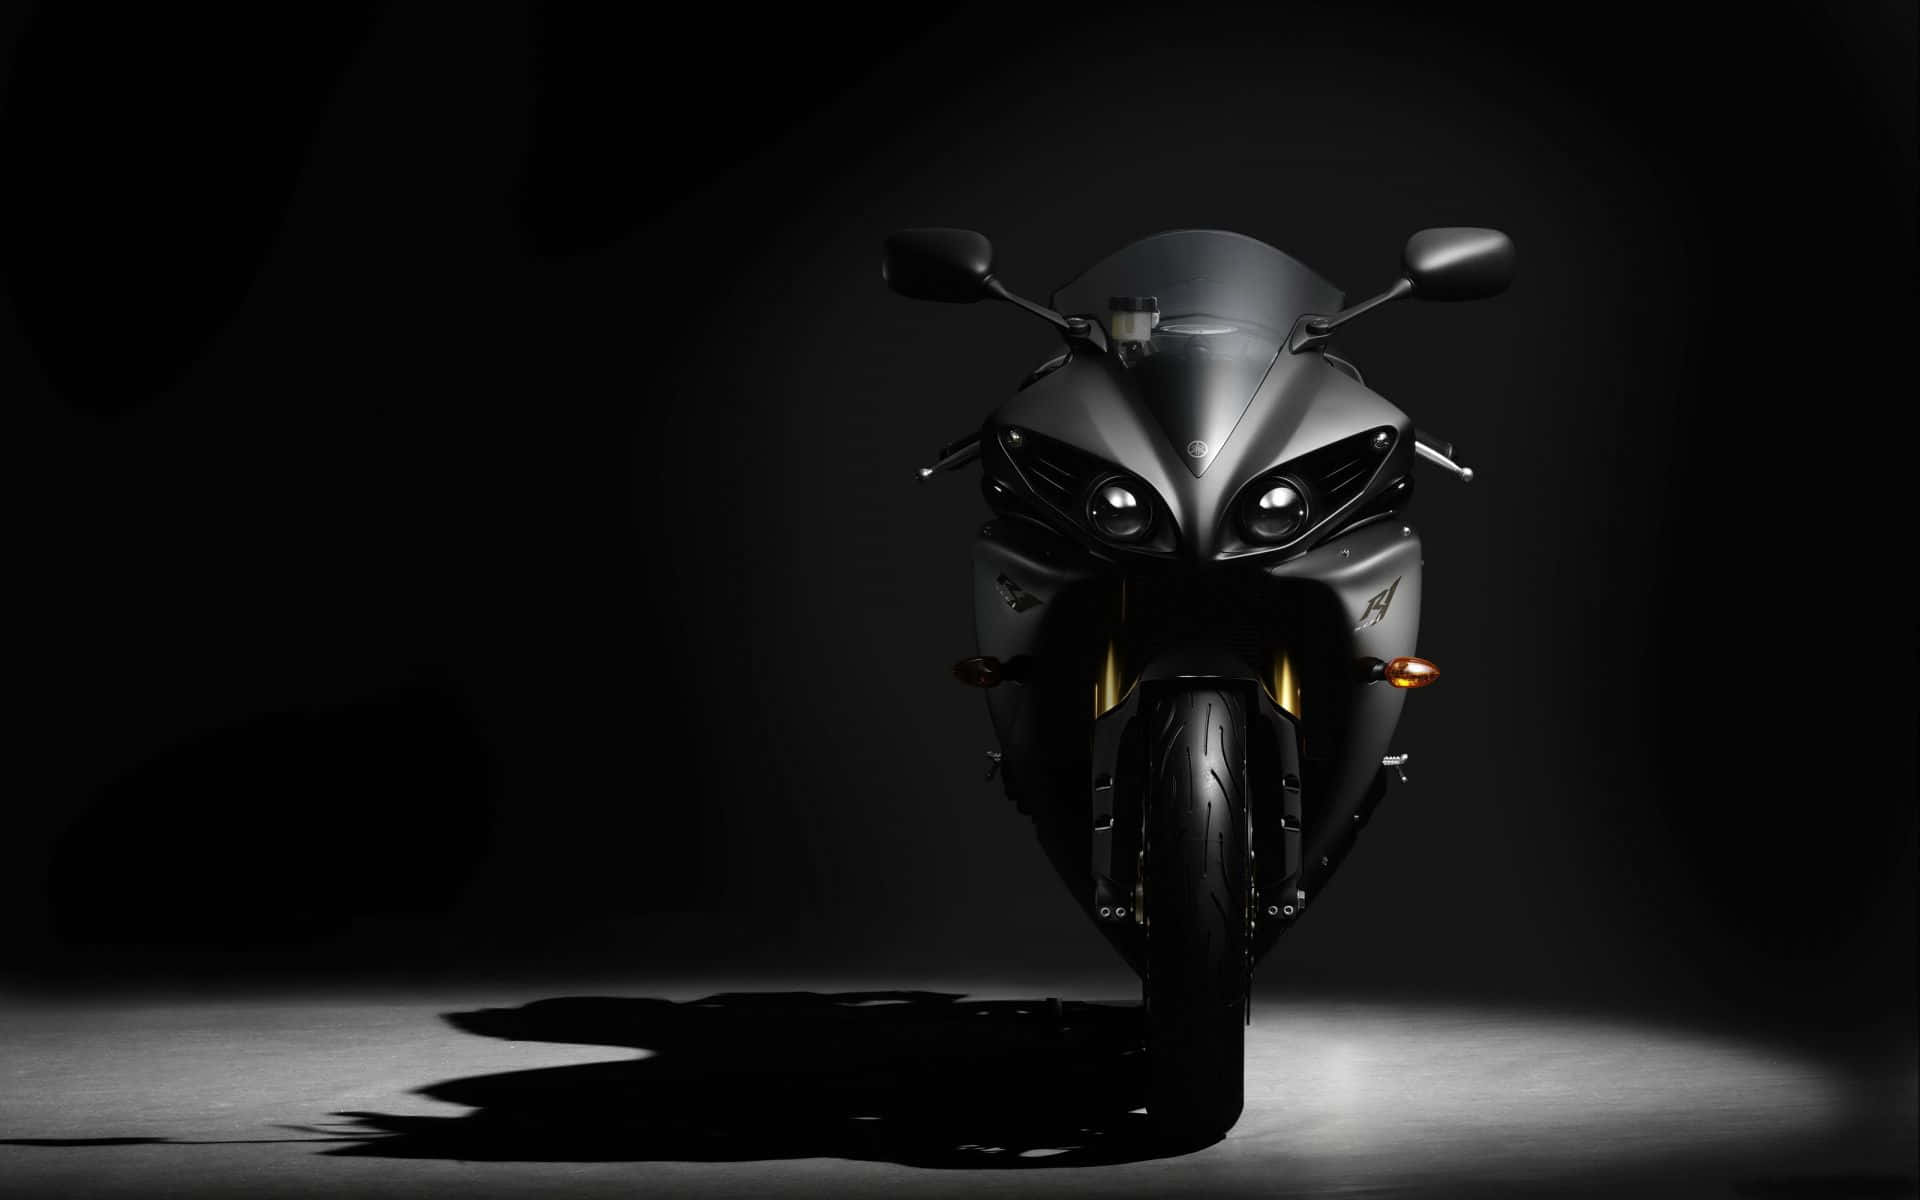 Sleek Motorcycle Dramatic Lighting Background